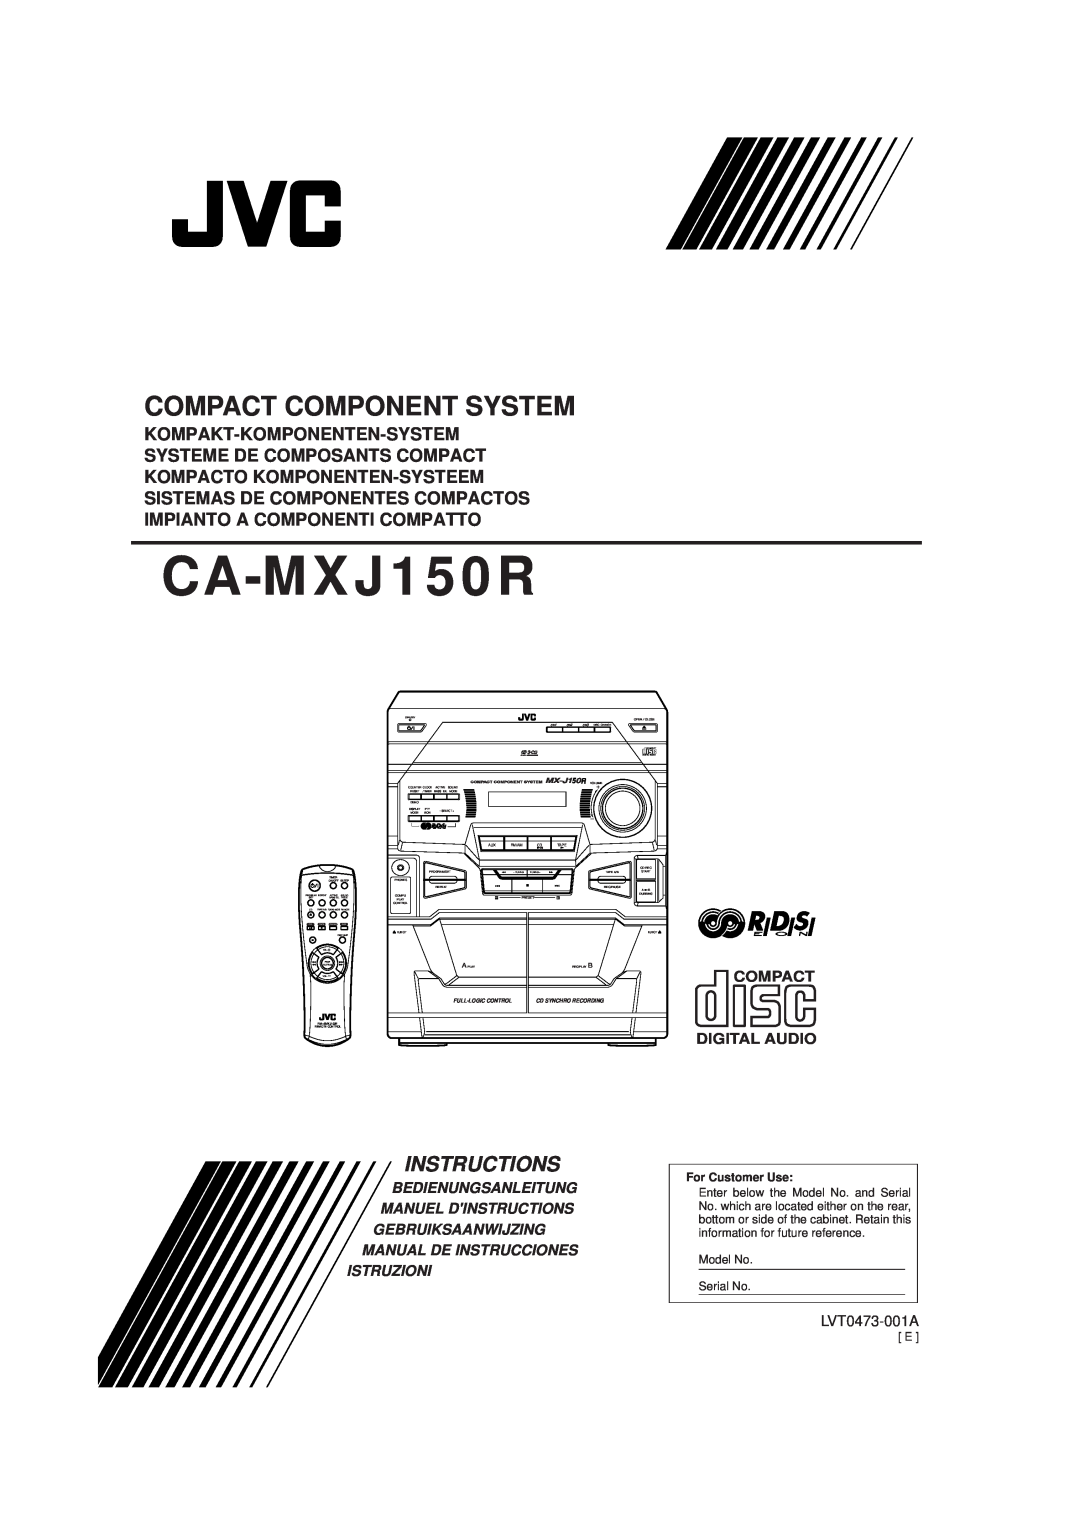 JVC CA-MXJ150R manual Bedienungsanleitung Manuel Dinstructions, Gebruiksaanwijzing Manual De Instrucciones, Istruzioni 